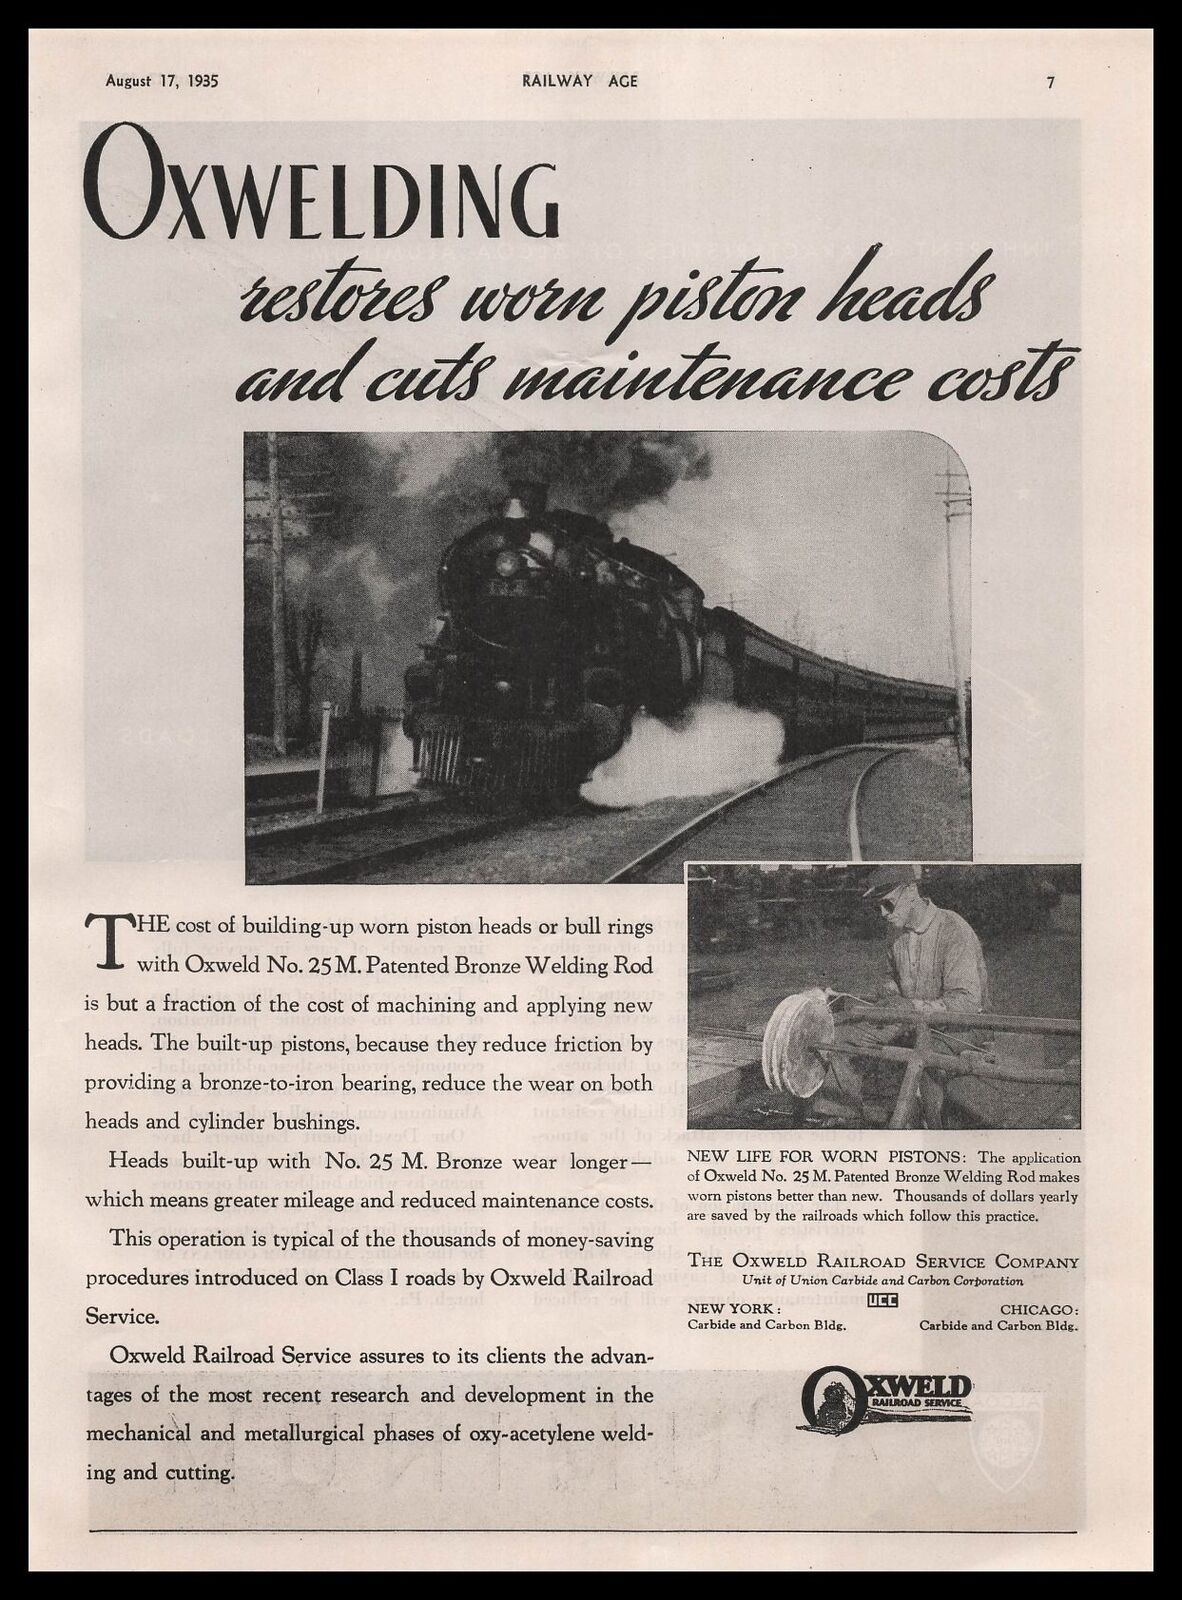 1935 Oxweld Railroad Service Co. Photo Welder Using Bronze Welding Rod Print Ad